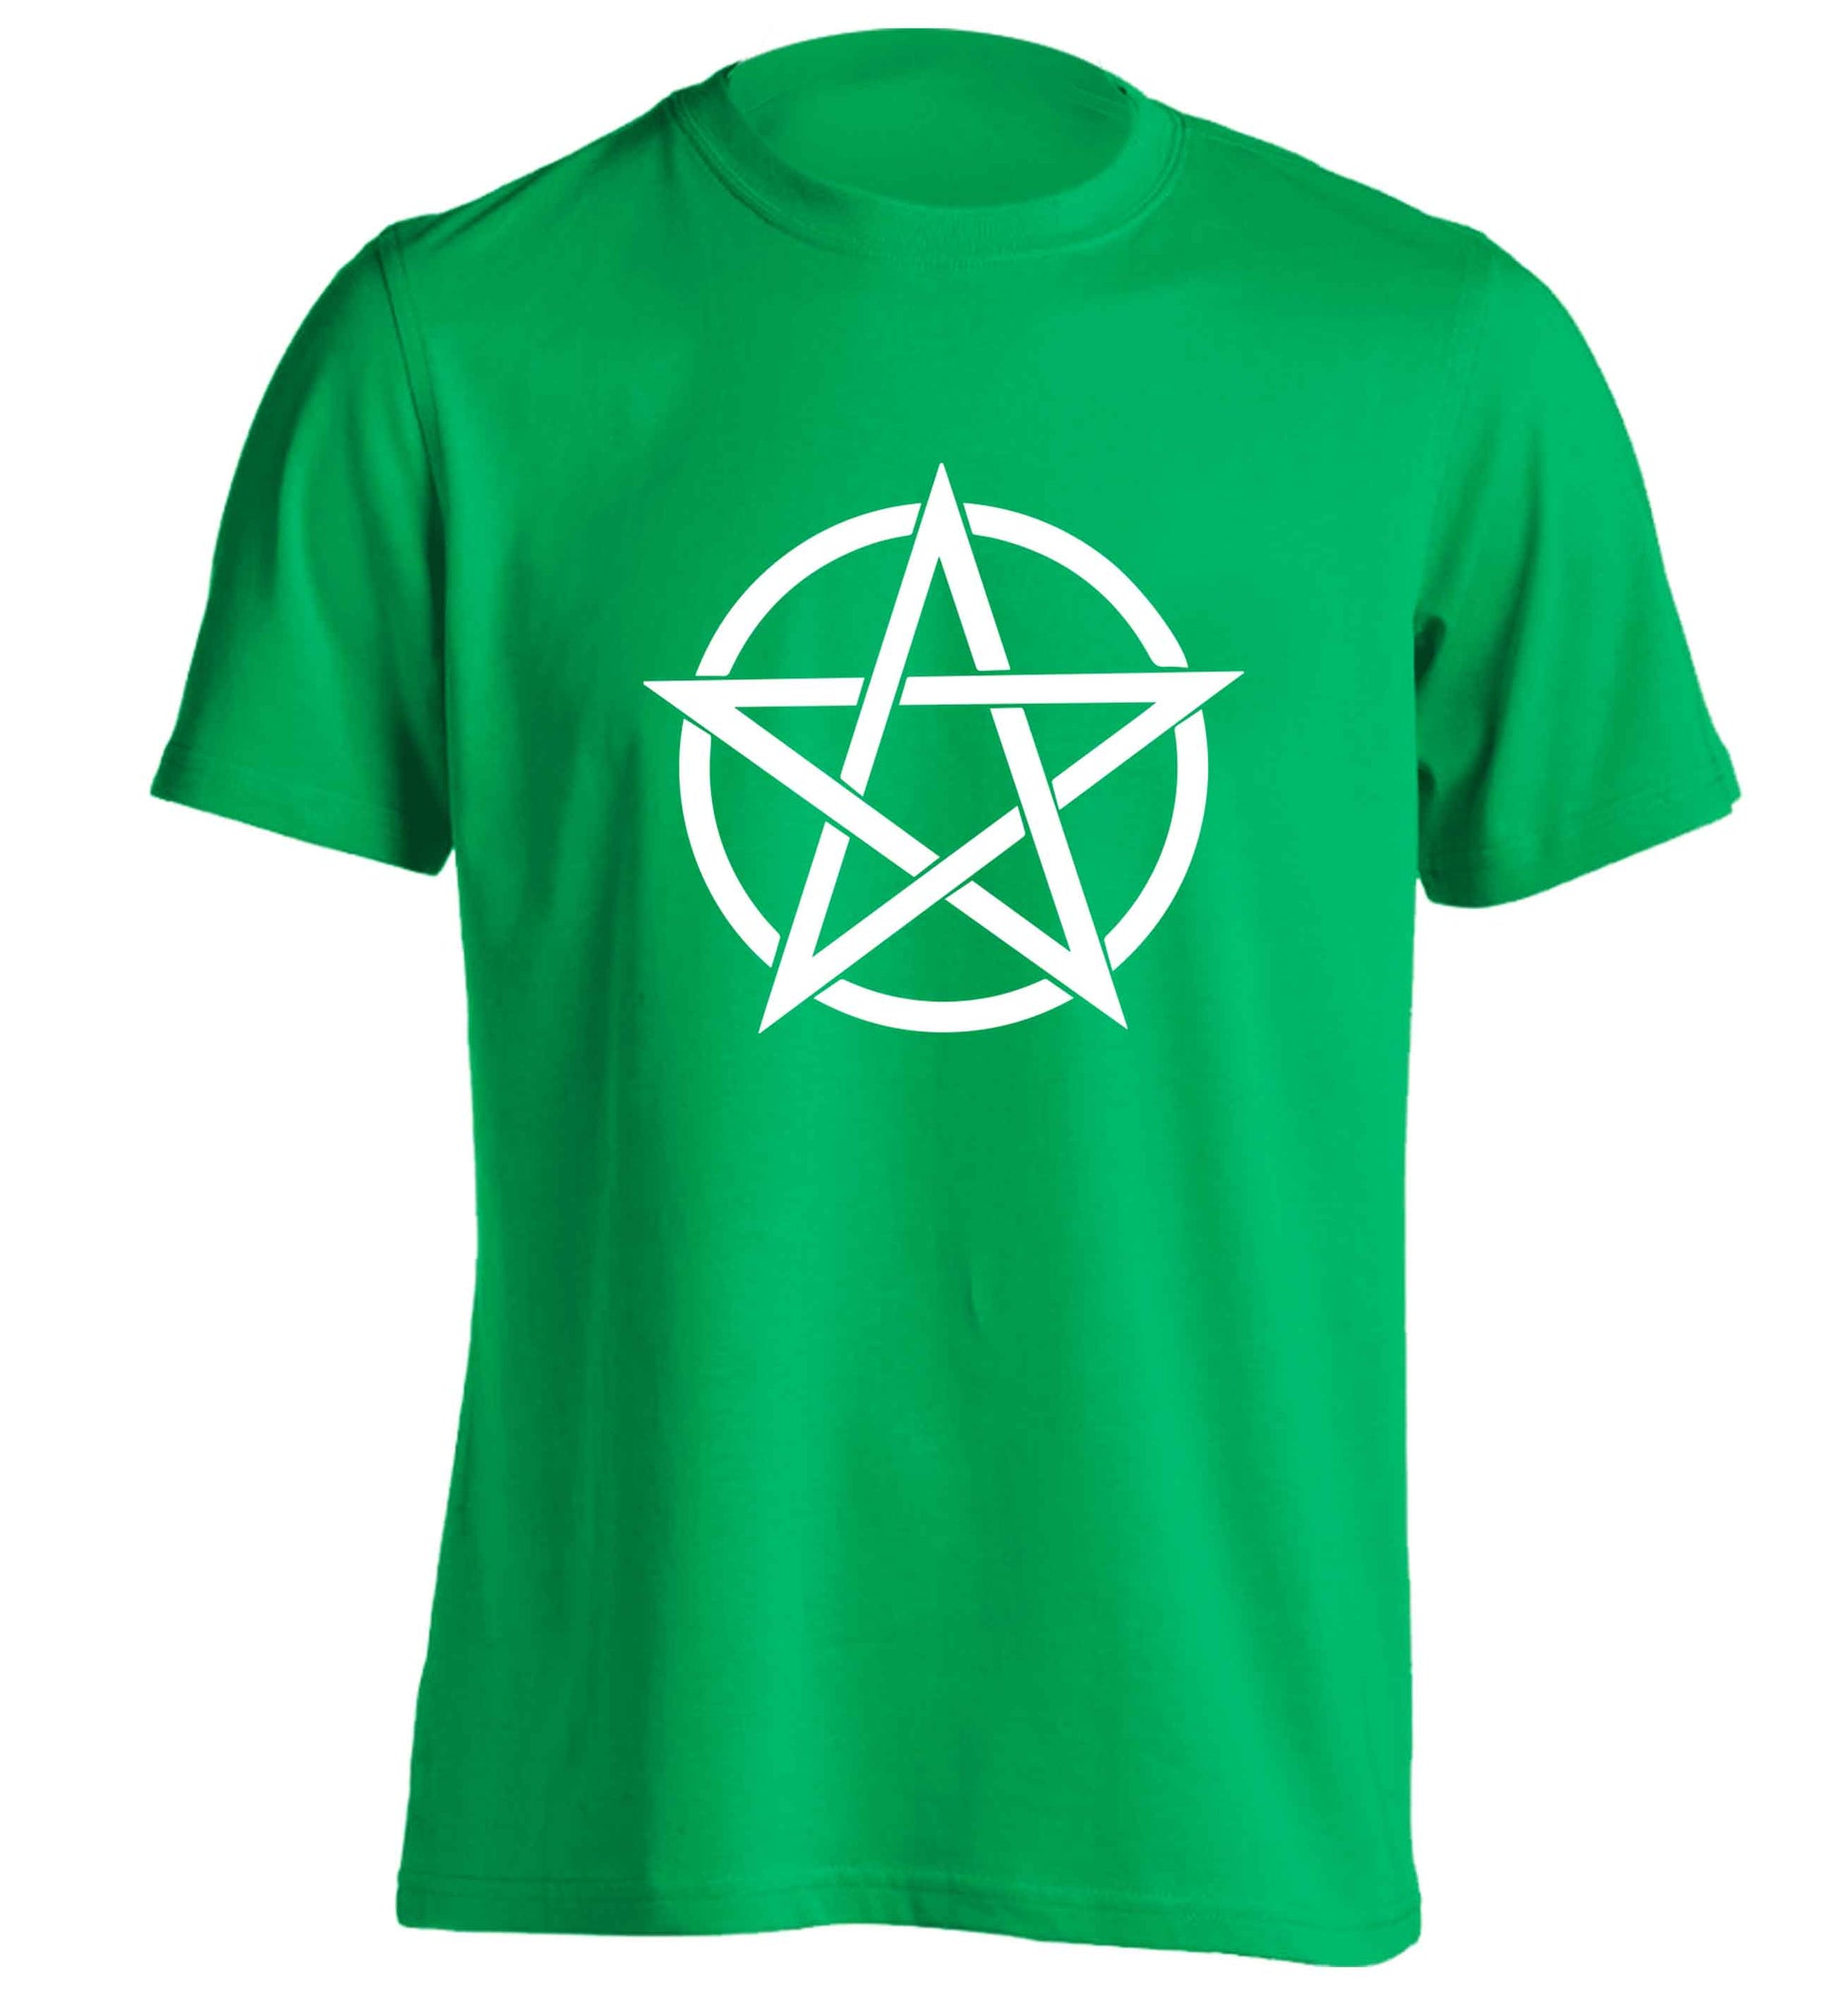 Pentagram symbol adults unisex green Tshirt 2XL